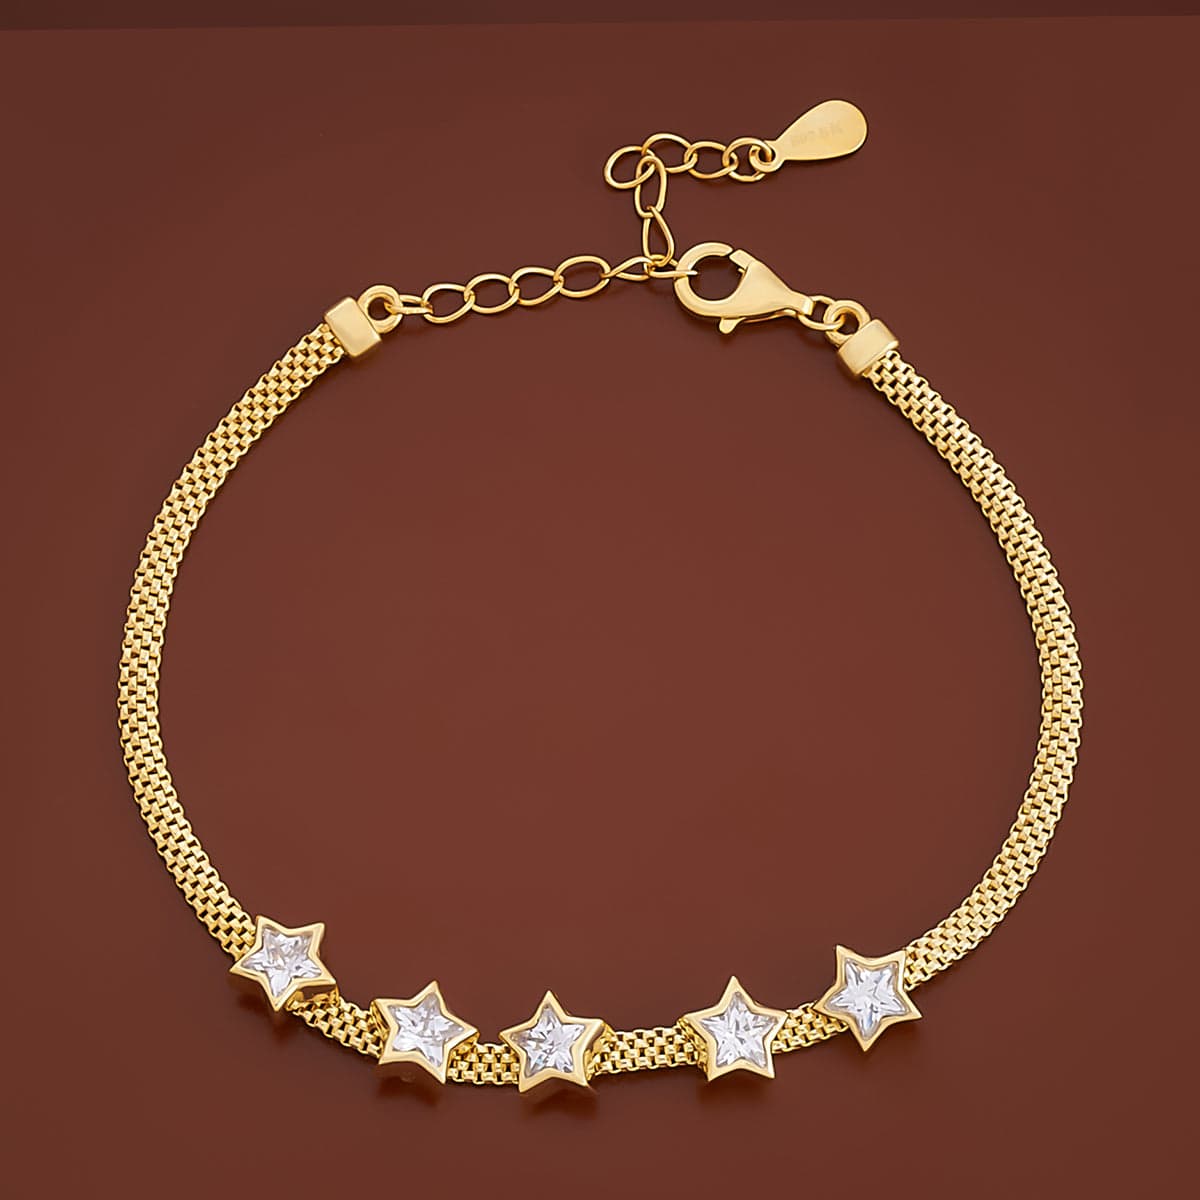 Gold men's bracelet | Mens gold bracelets, Man gold bracelet design, Gold  bracelet simple